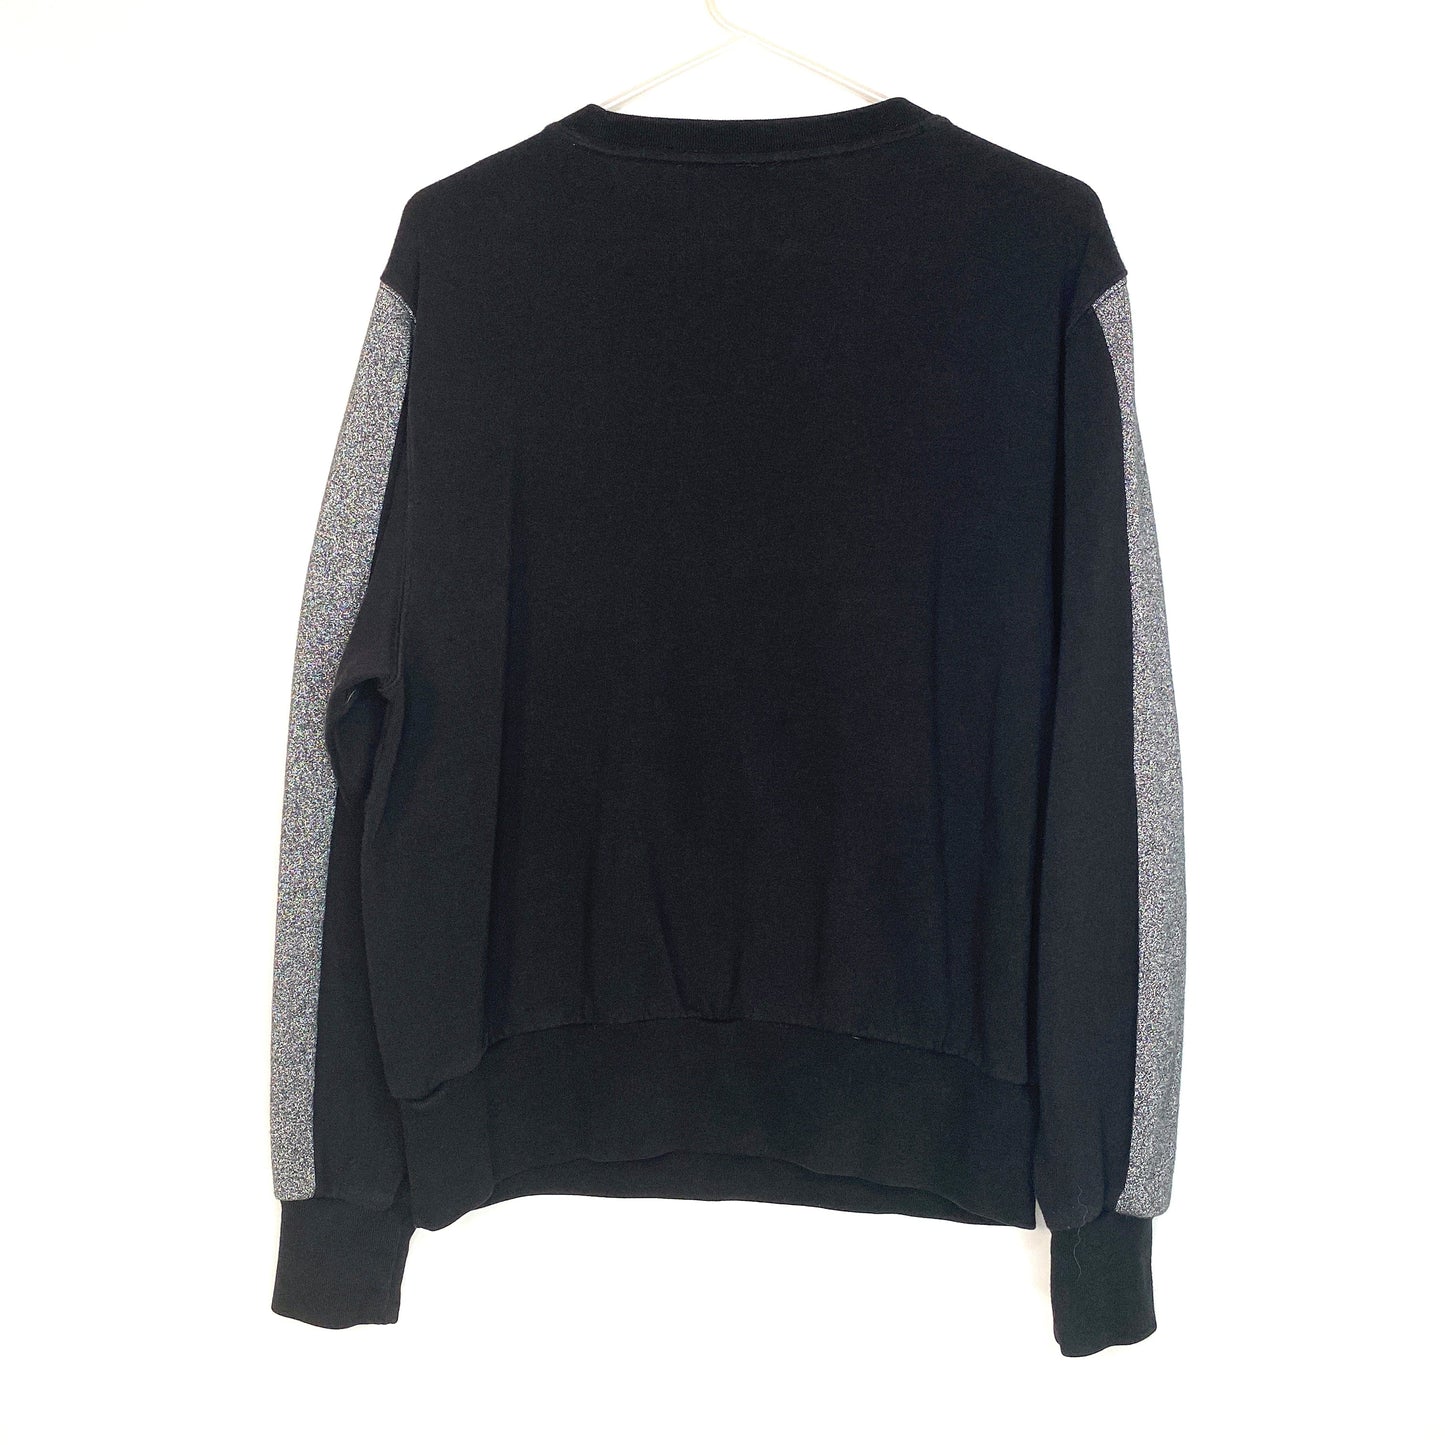 Limited Edition PINK Victoria's Secret Black Palm Sweatshirt S Black Solid Long Sleeve